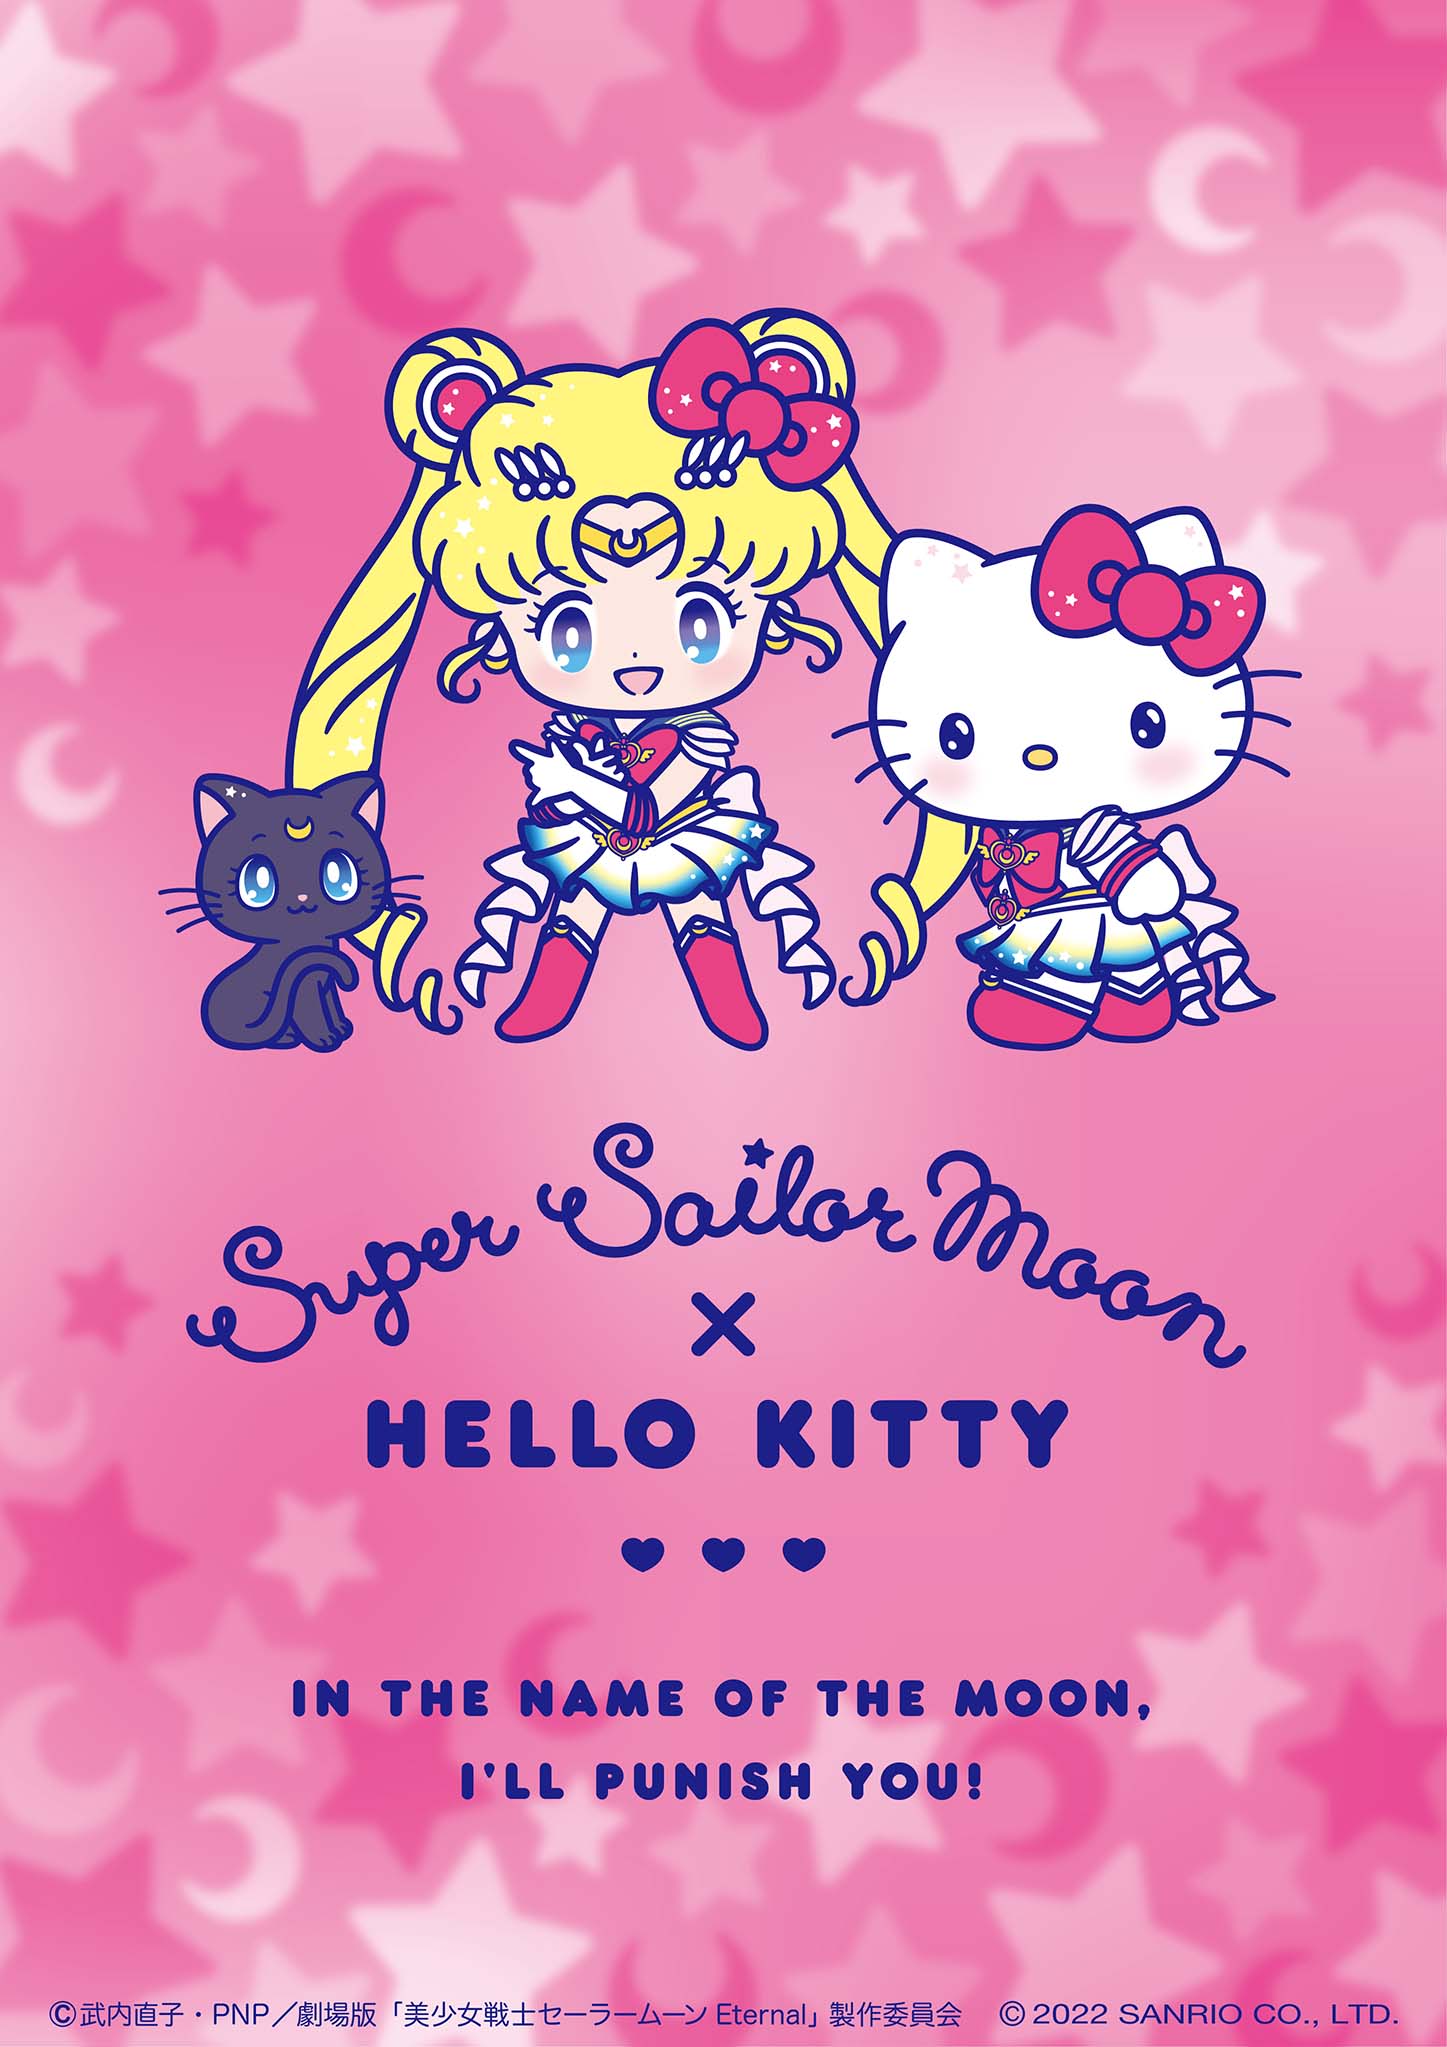 New Sailor Moon x Jimmy Choo Collaboration : r/sailormoon